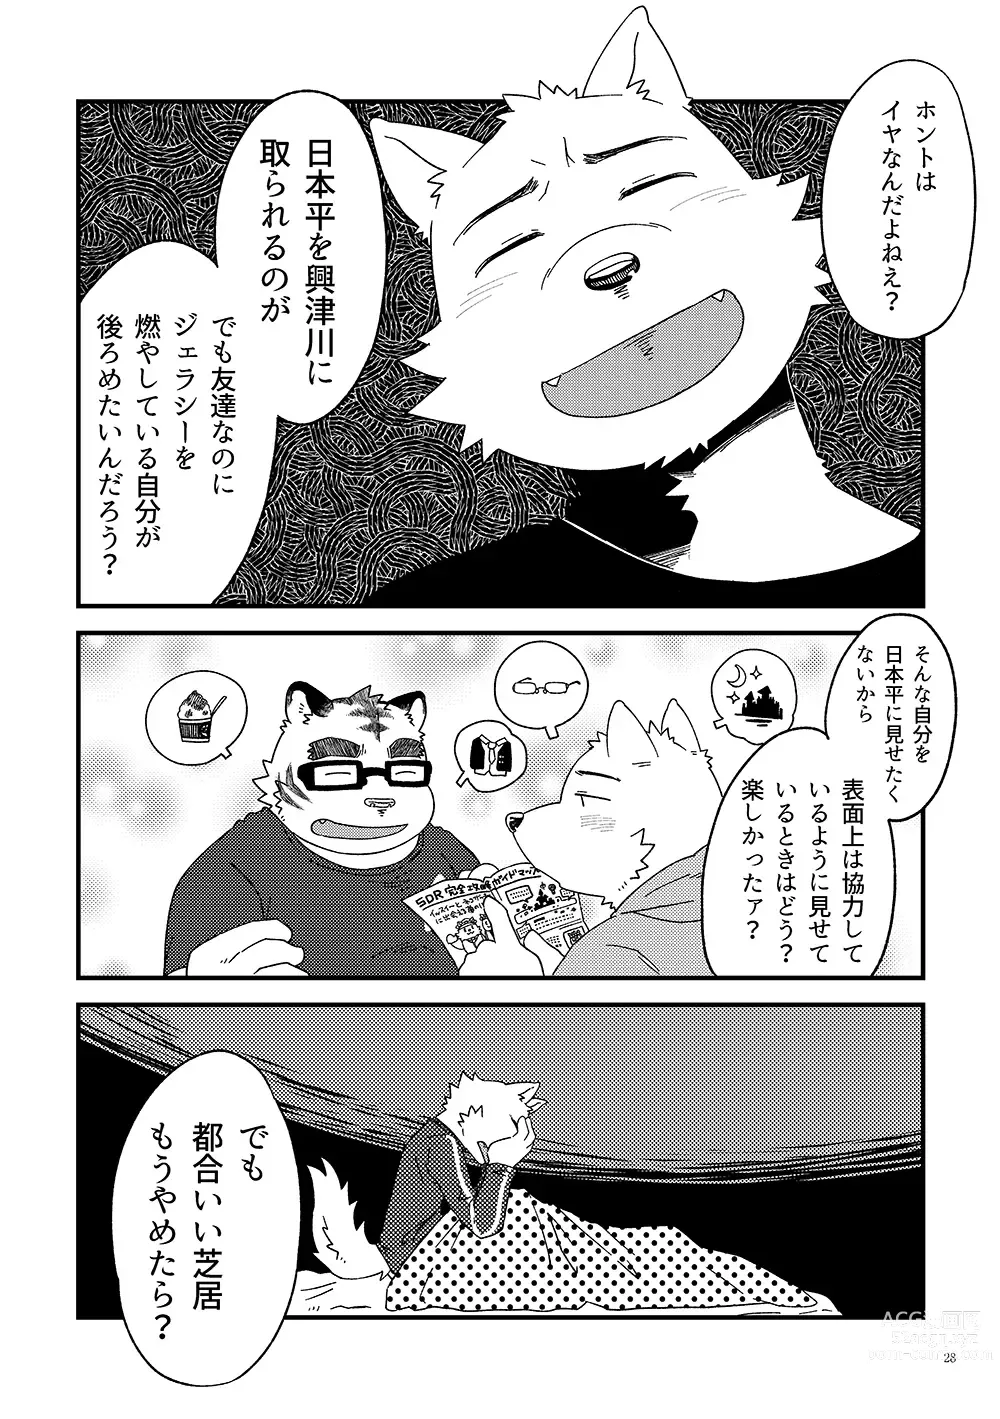 Page 29 of doujinshi Sanbunnoichi Vol 2: Datte sukidakara.